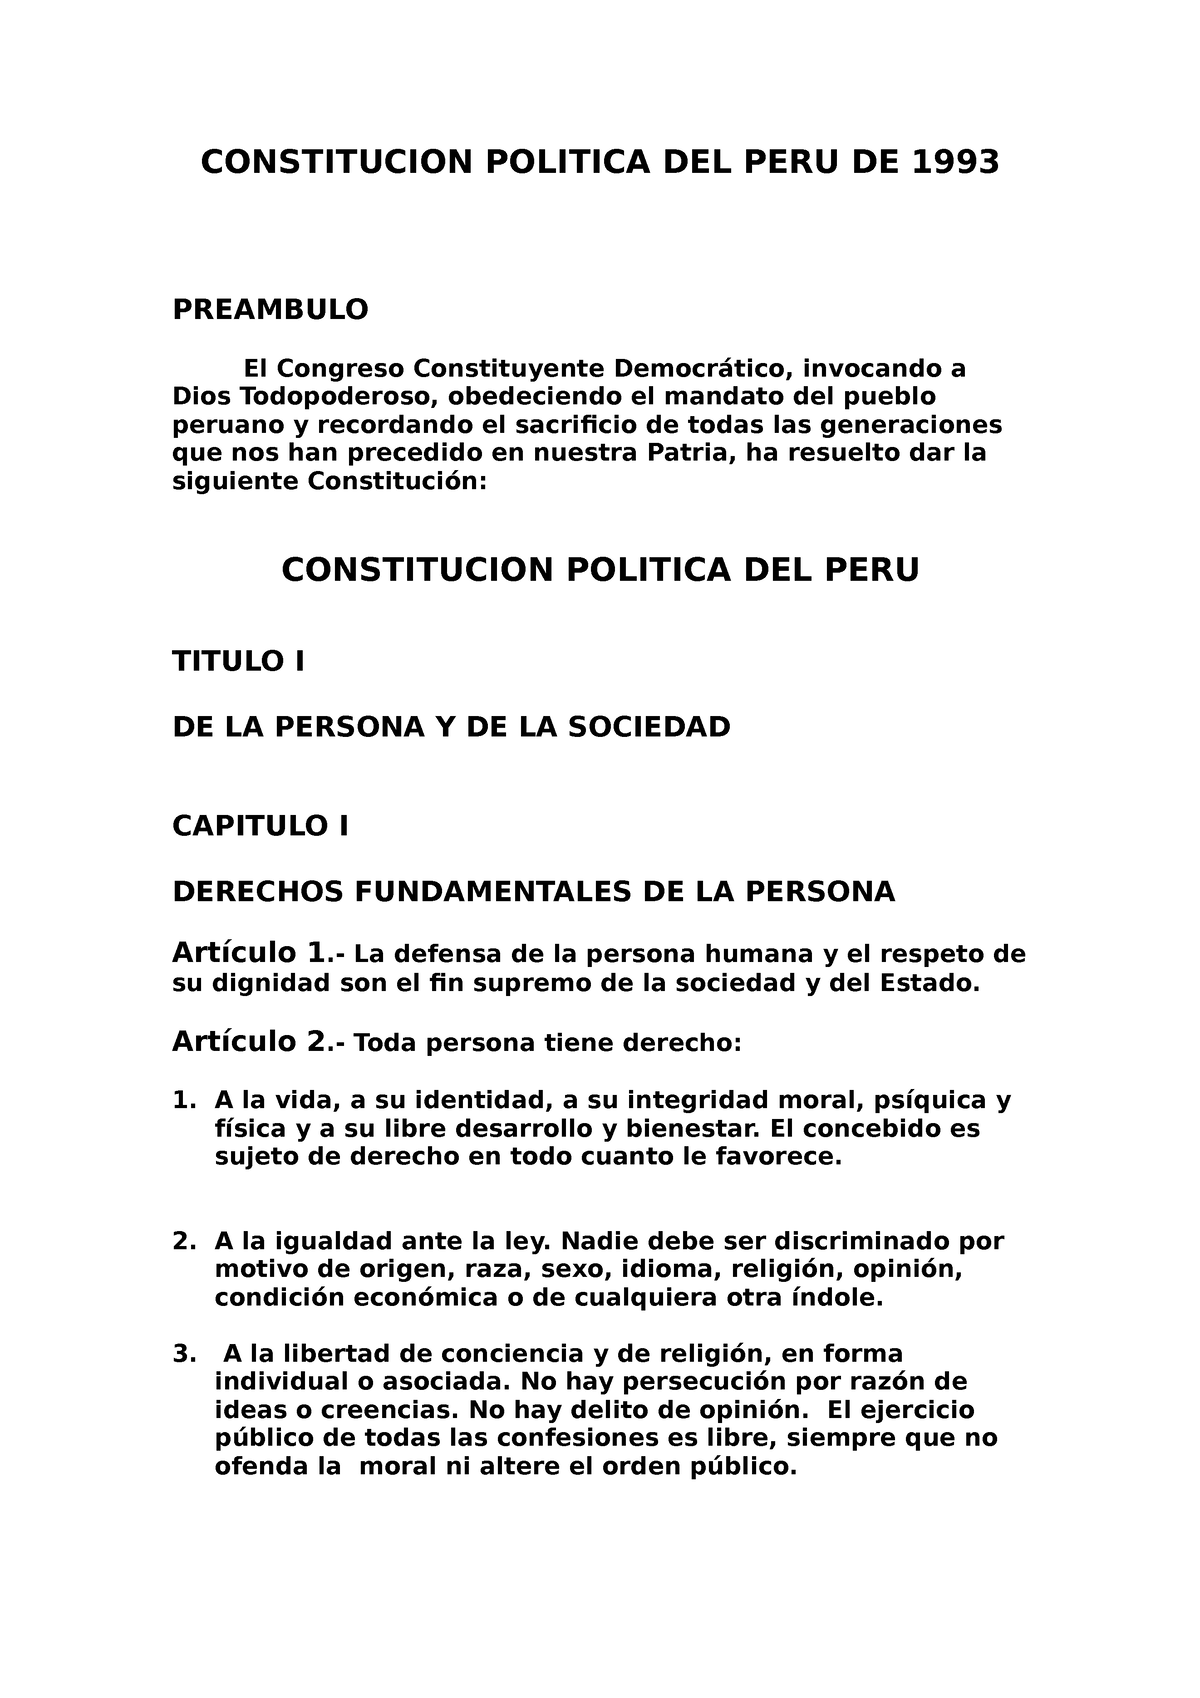 Constitucion Politica Del Peru De 1993 Actualizada Al 26 De Marzo De 2021 Constitucion 9811